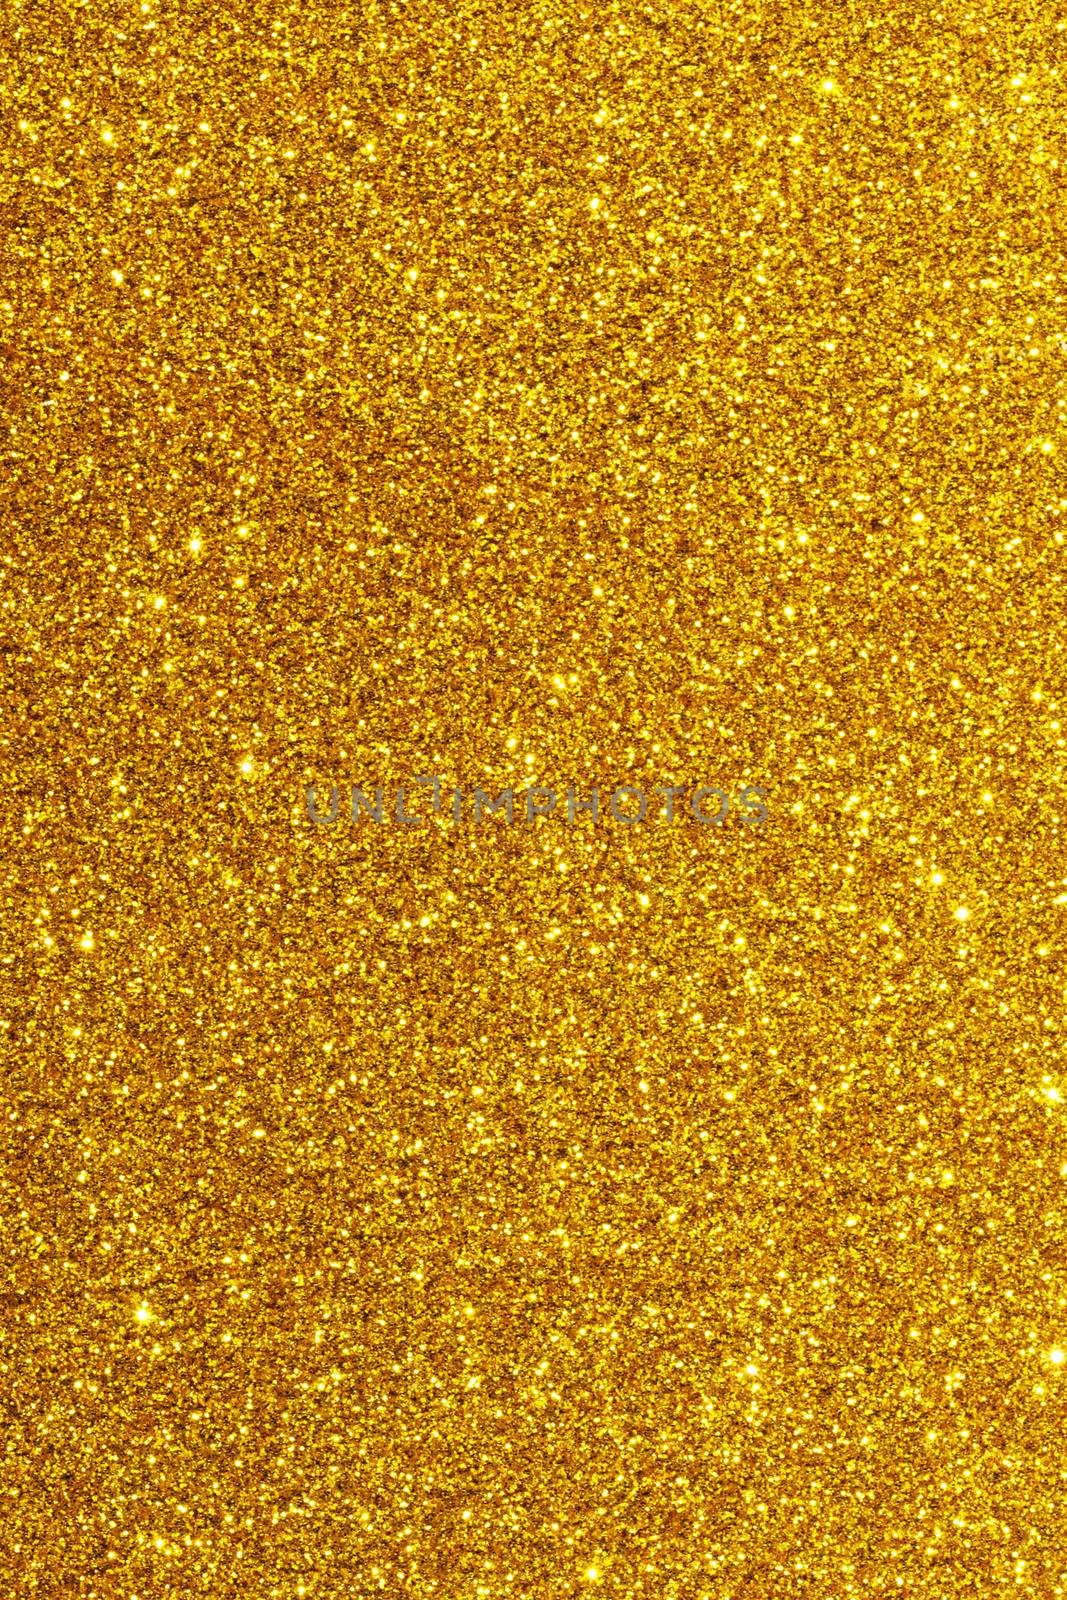 Shiny golden lights background by Yellowj